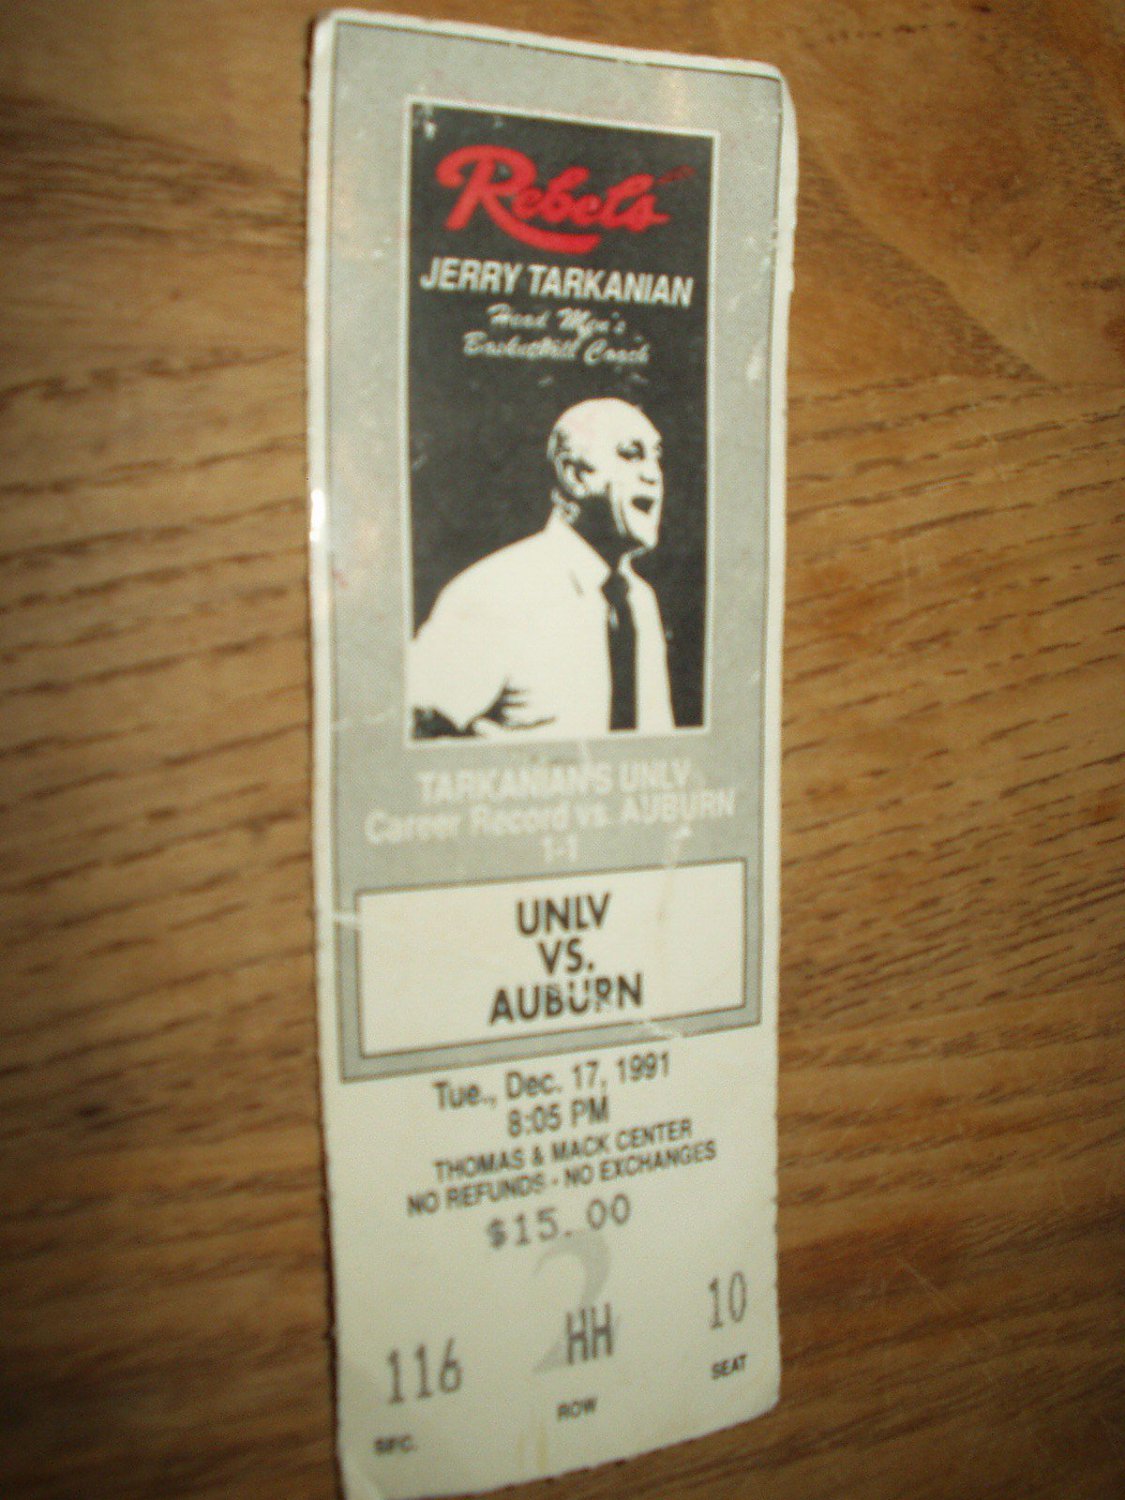 UNLV NCAA Basketball runnin rebels 1991 vs auburn ticket stub jerry tarkanian